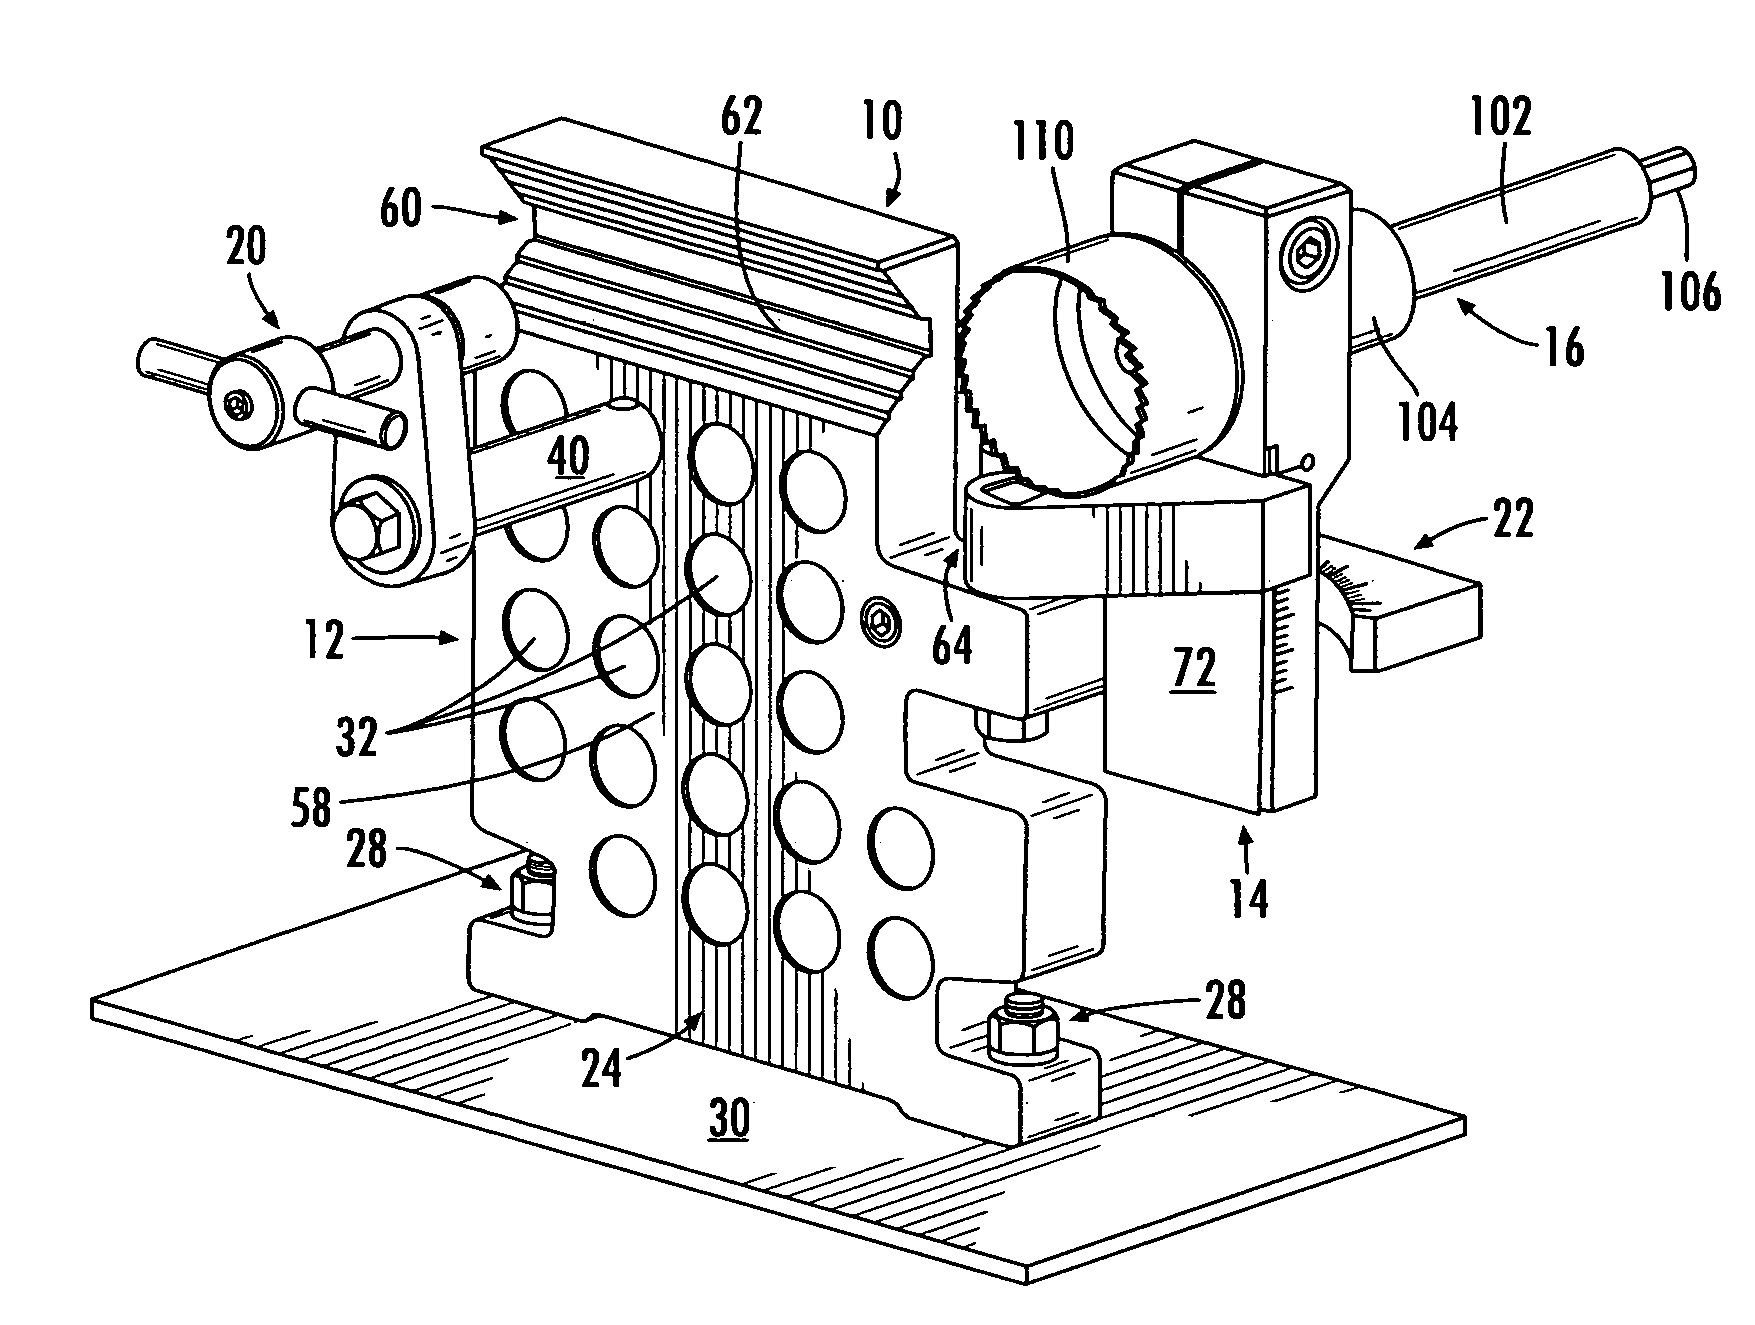 Rotary tube notching apparatus